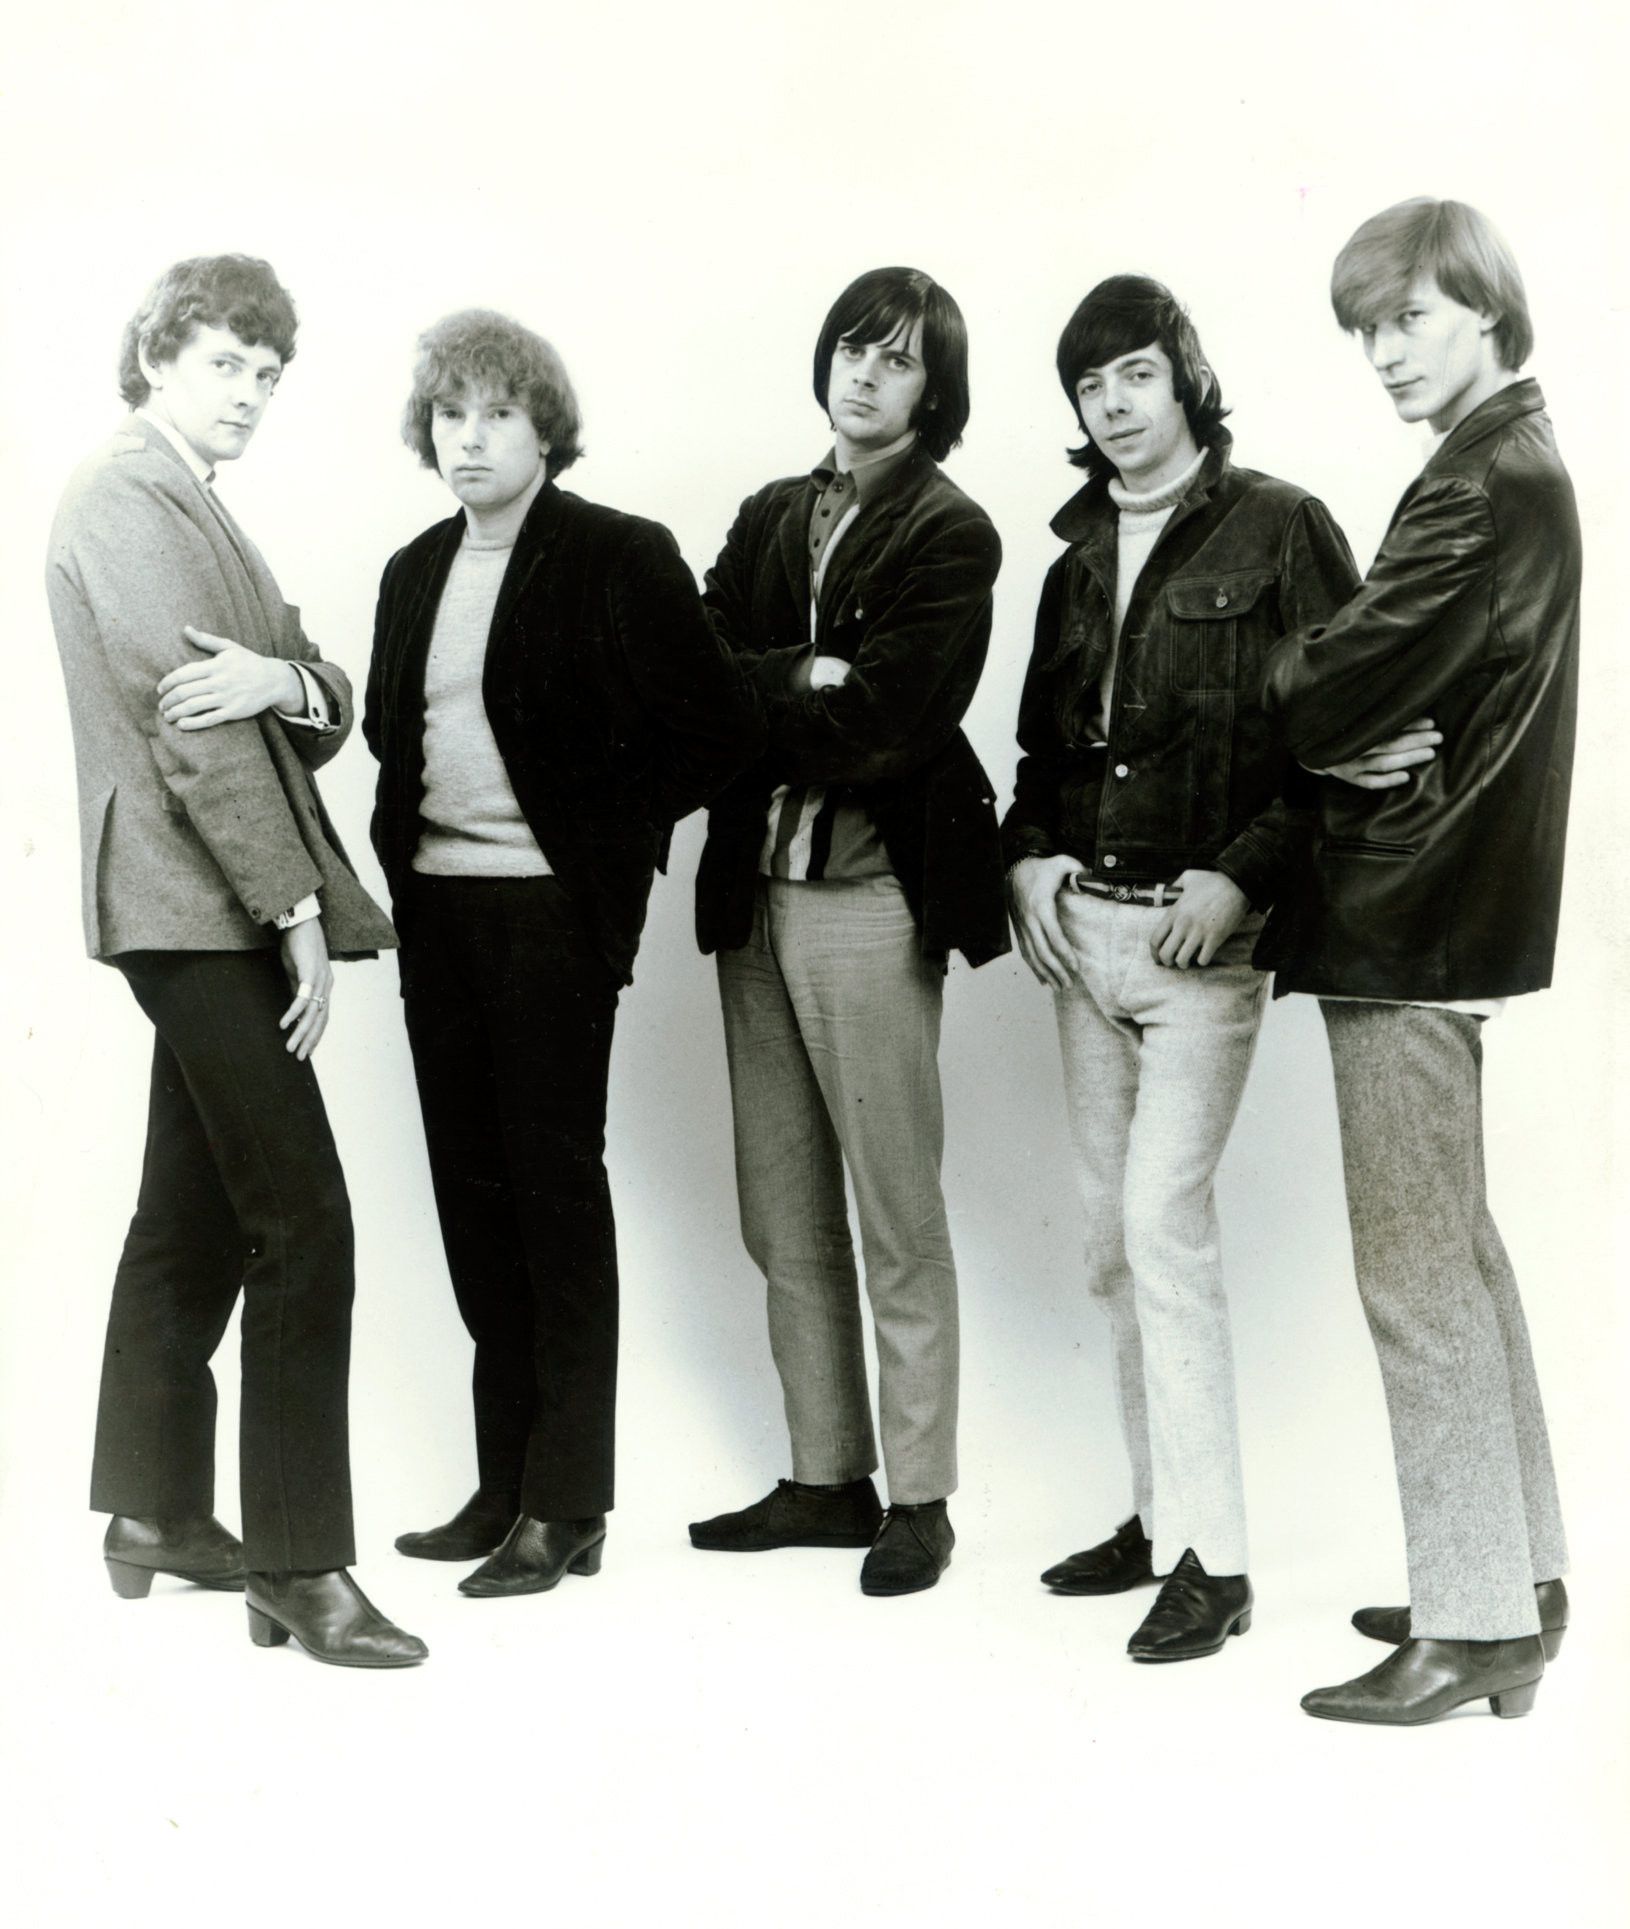 Moondance — musicians flocked to play Van Morrison's 1970 track